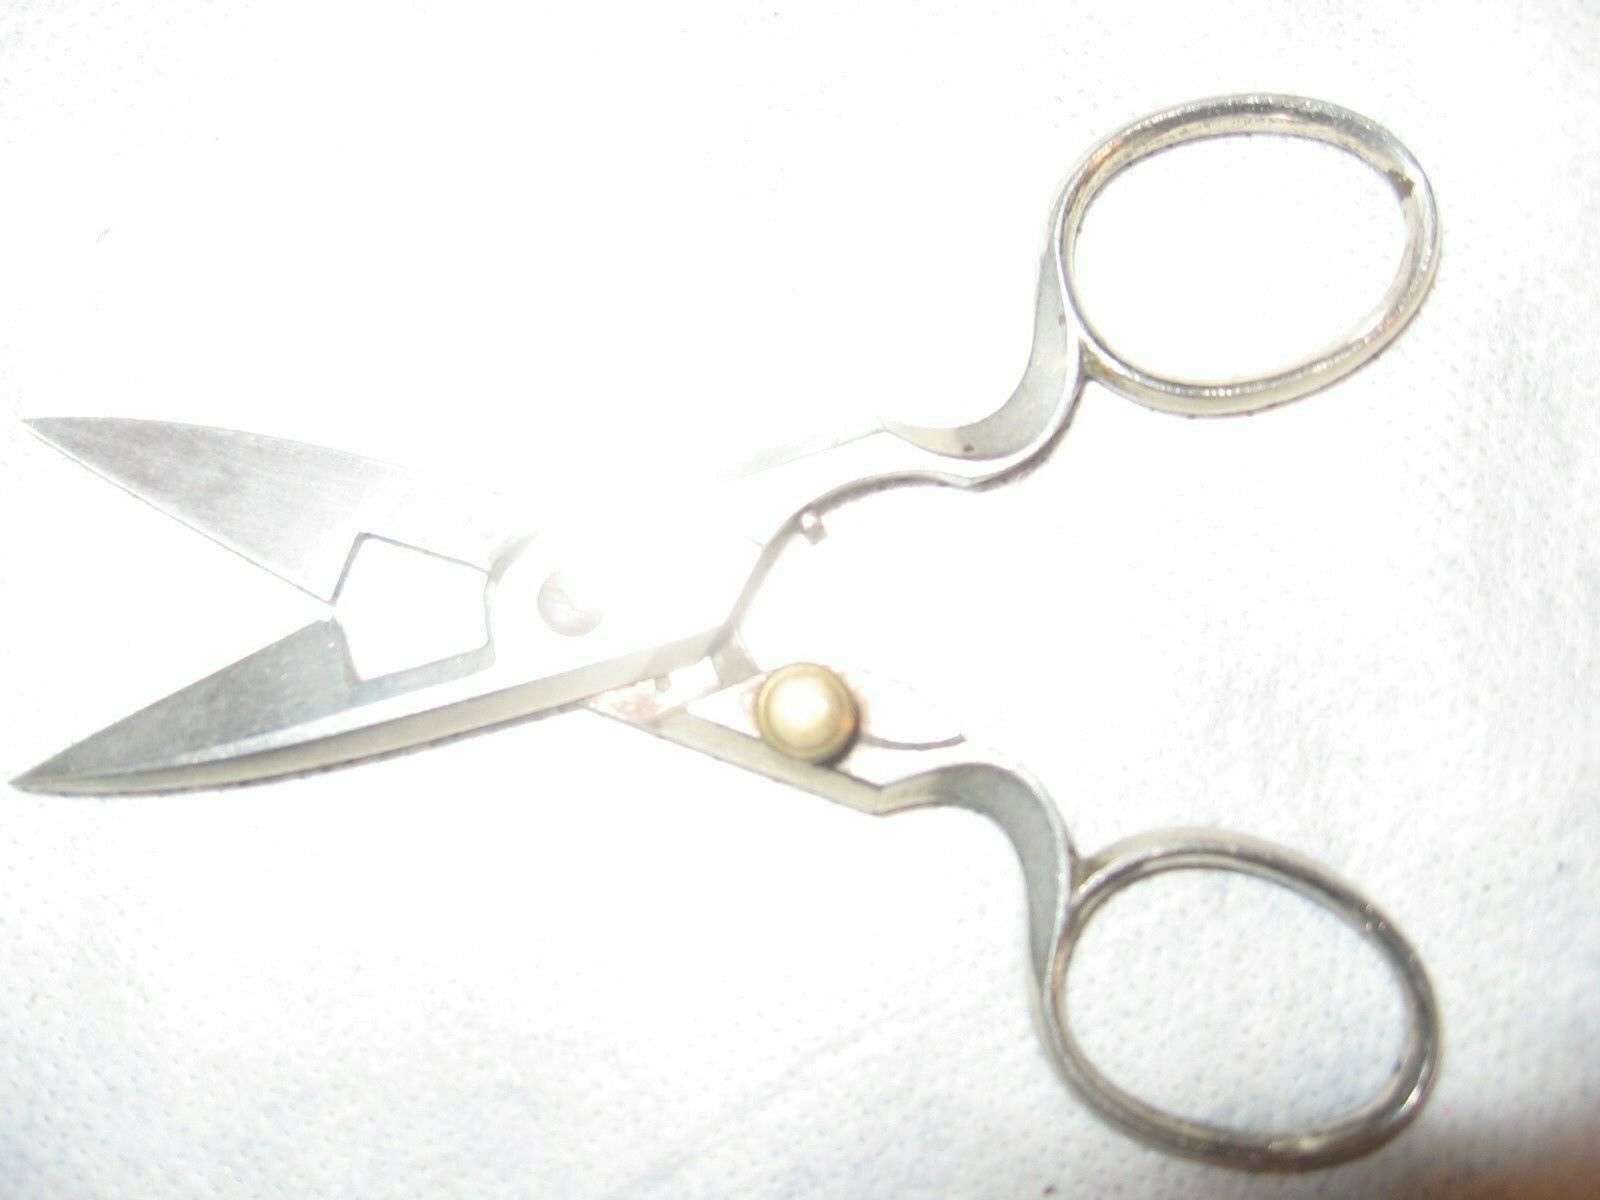 Vintage Antique Krusius Brothers Buttonhole Scissors with Screw